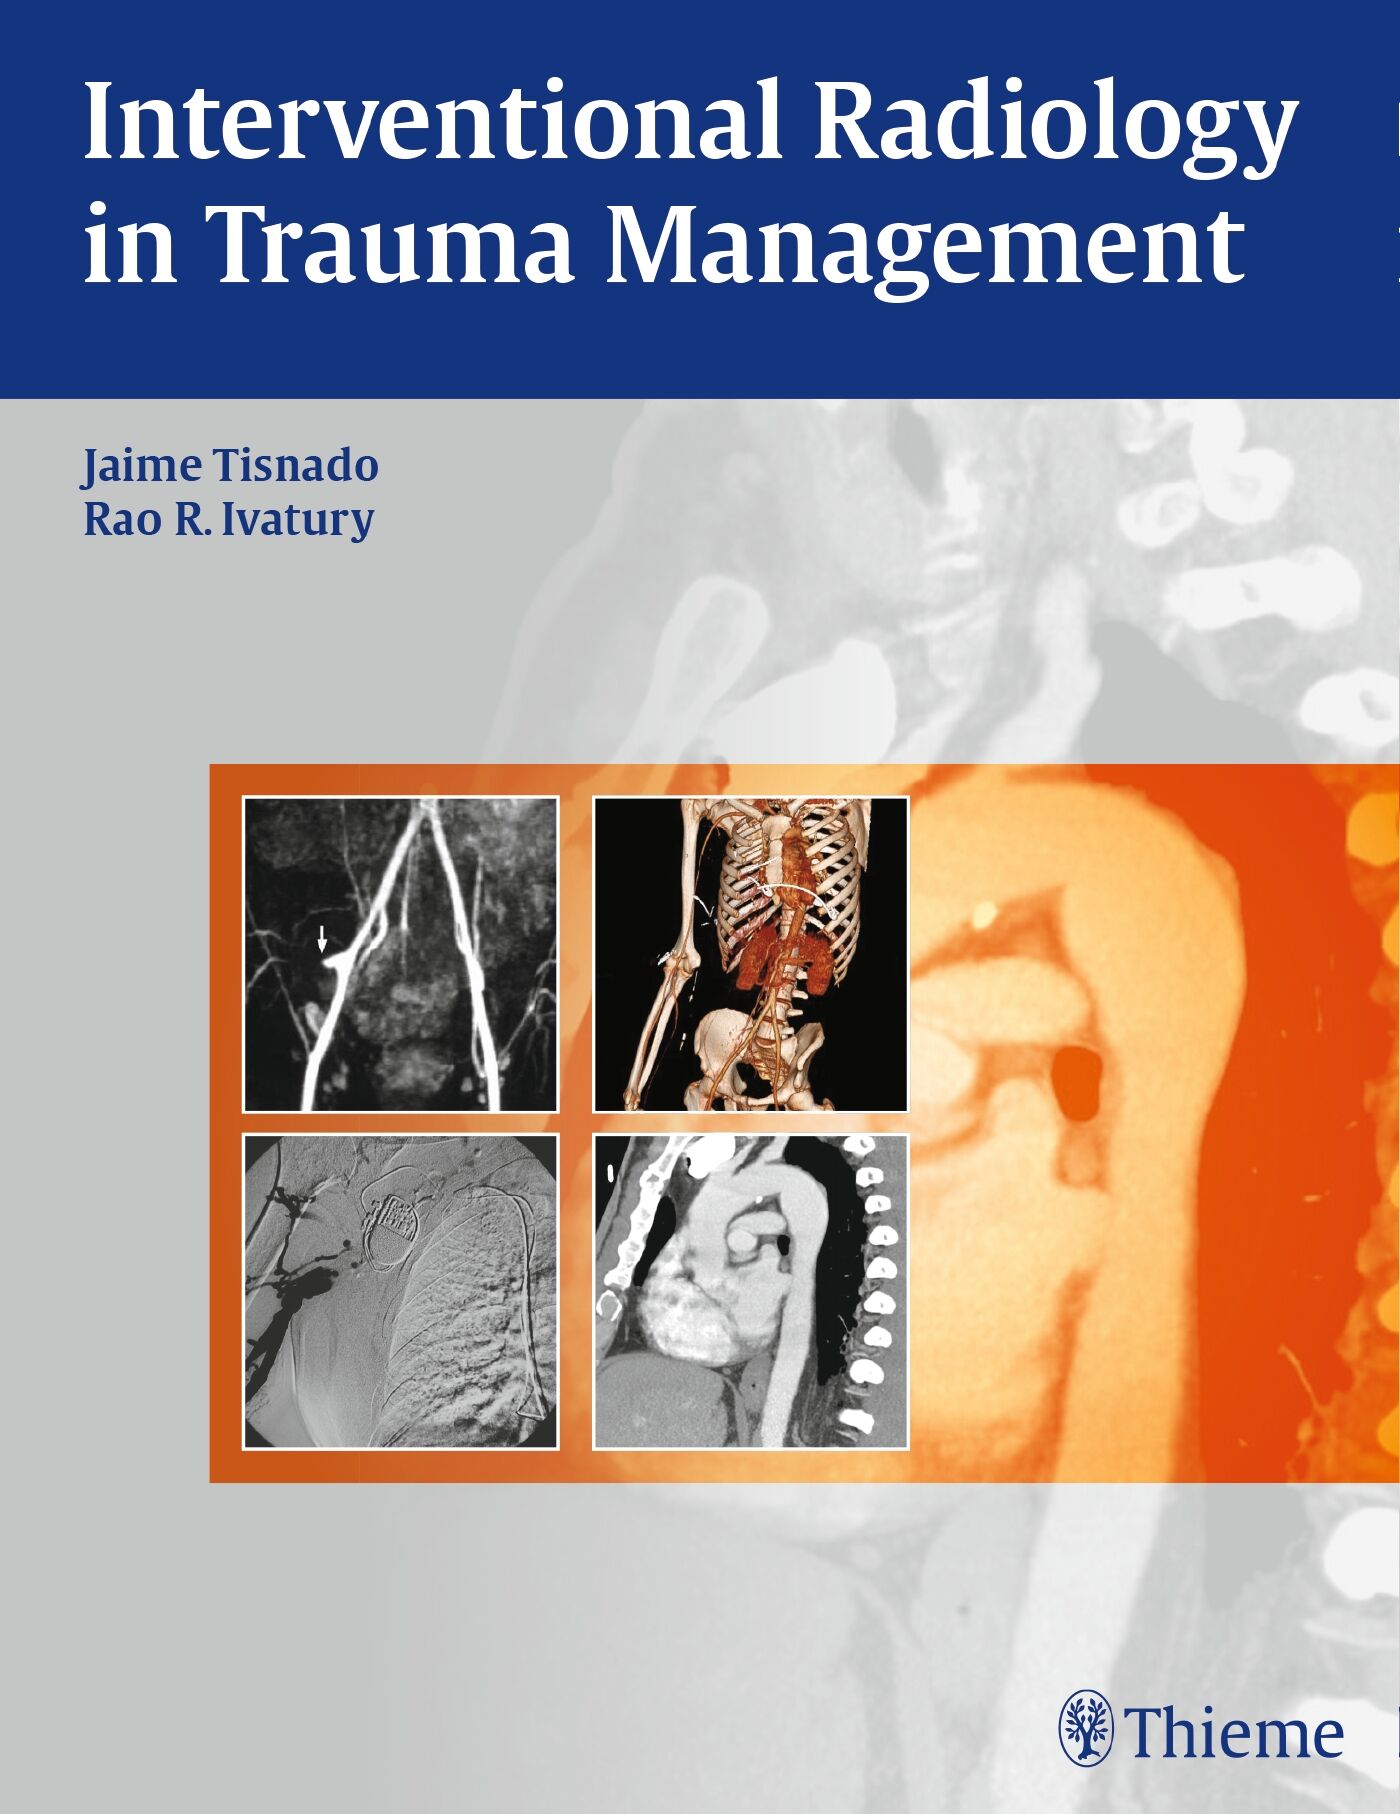 Interventional Radiology in Trauma, 9781604063110